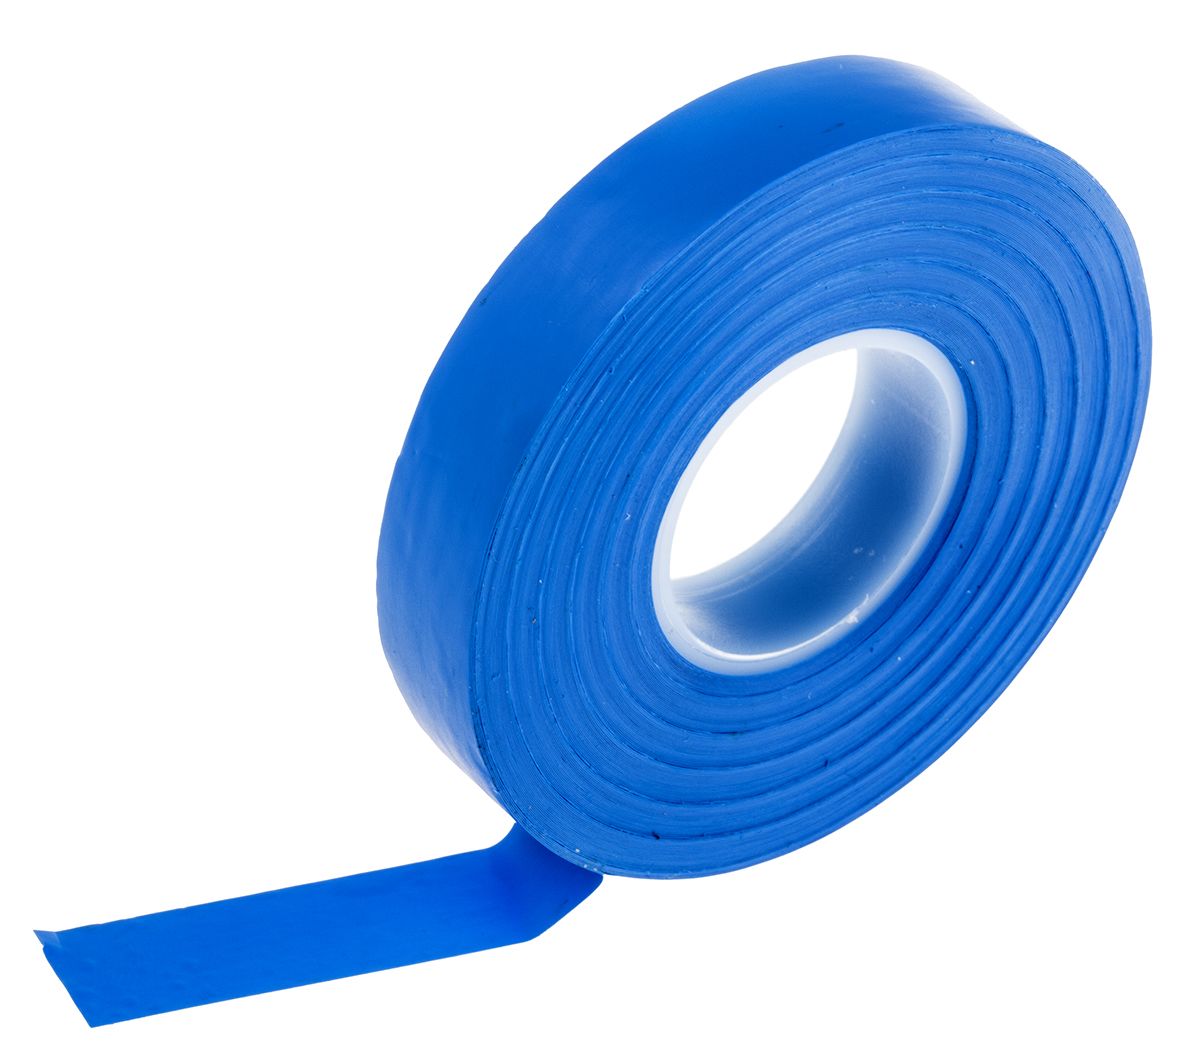 Cinta aislante de PVC Advance Tapes AT7 de color Azul, 12mm x 20m, grosor 0.13mm